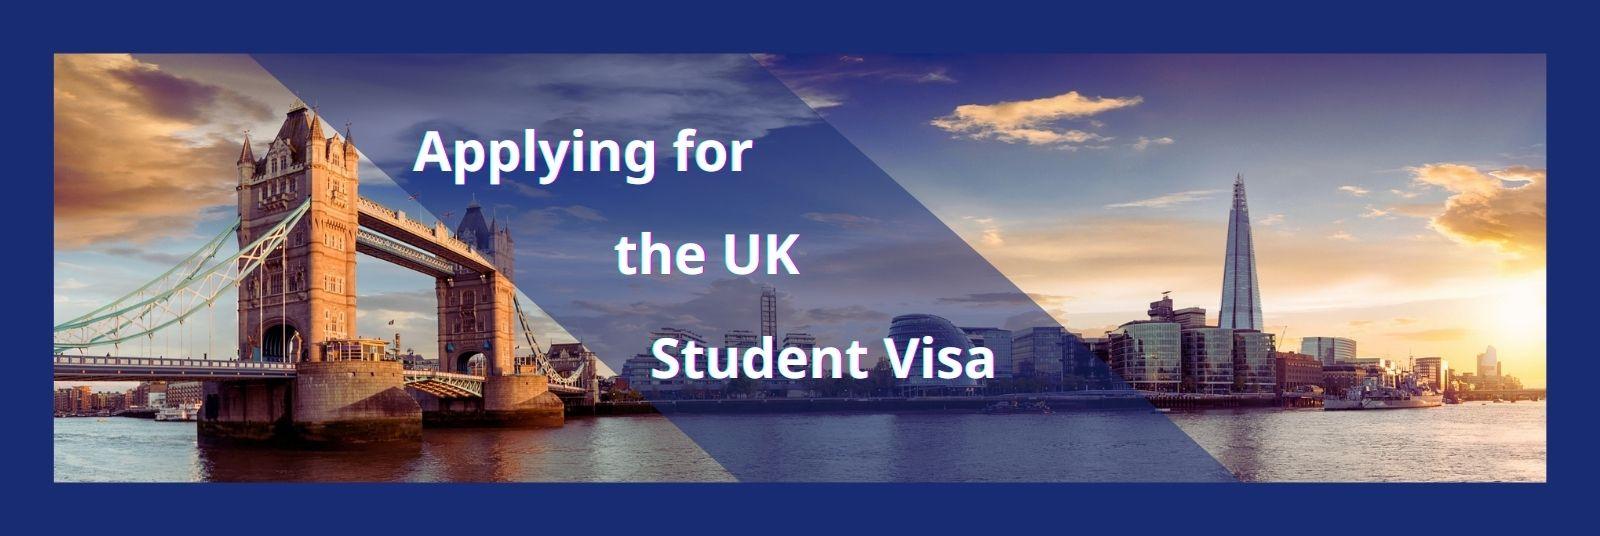 UK student visa application